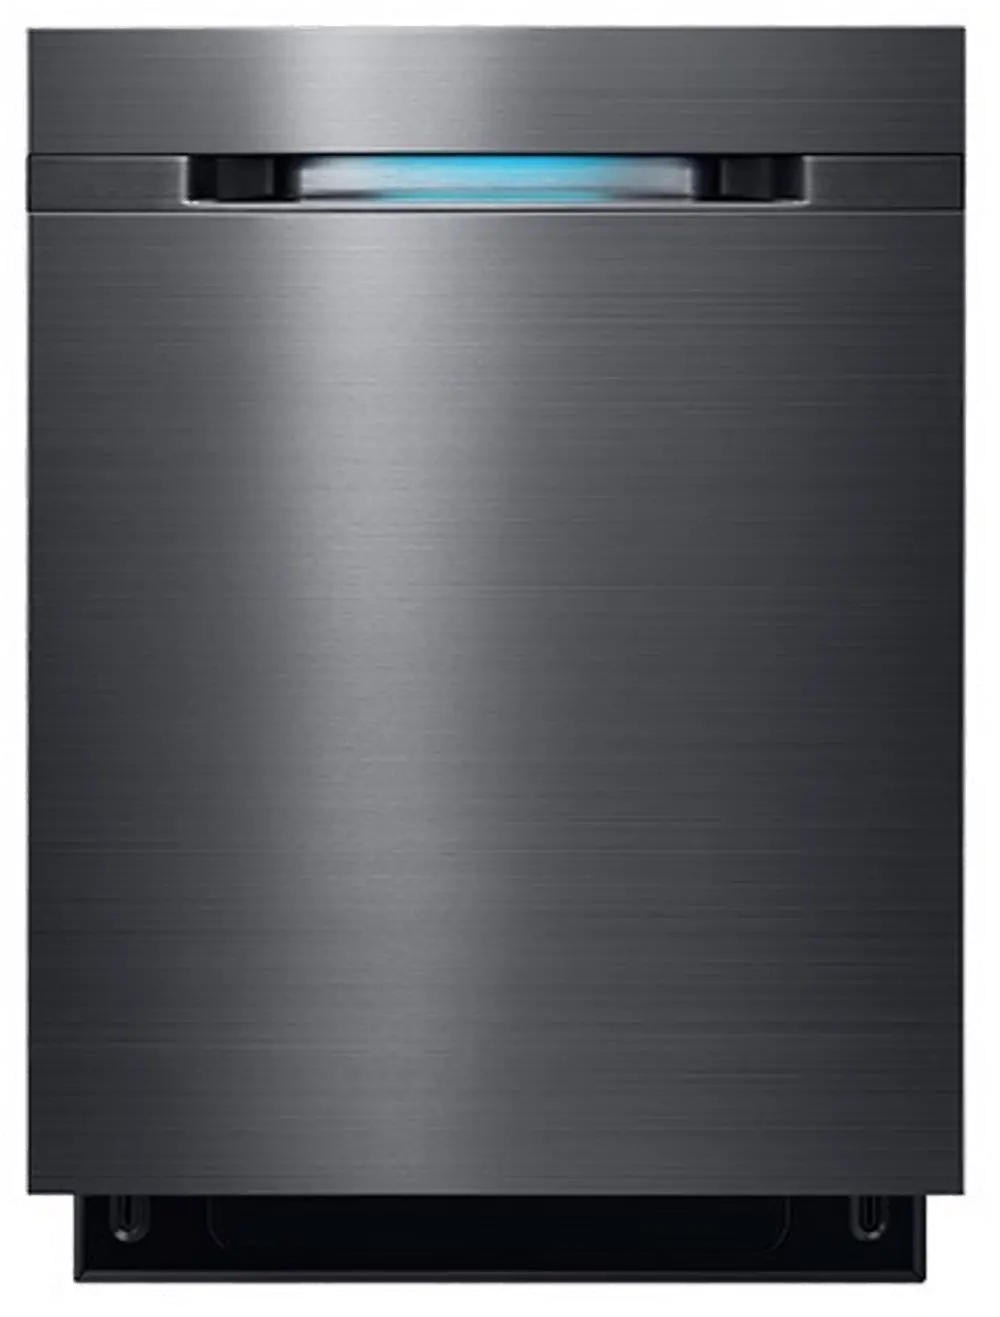 DW80J7550UG Samsung Built-in Dishwasher - Black Stainless Steel-1